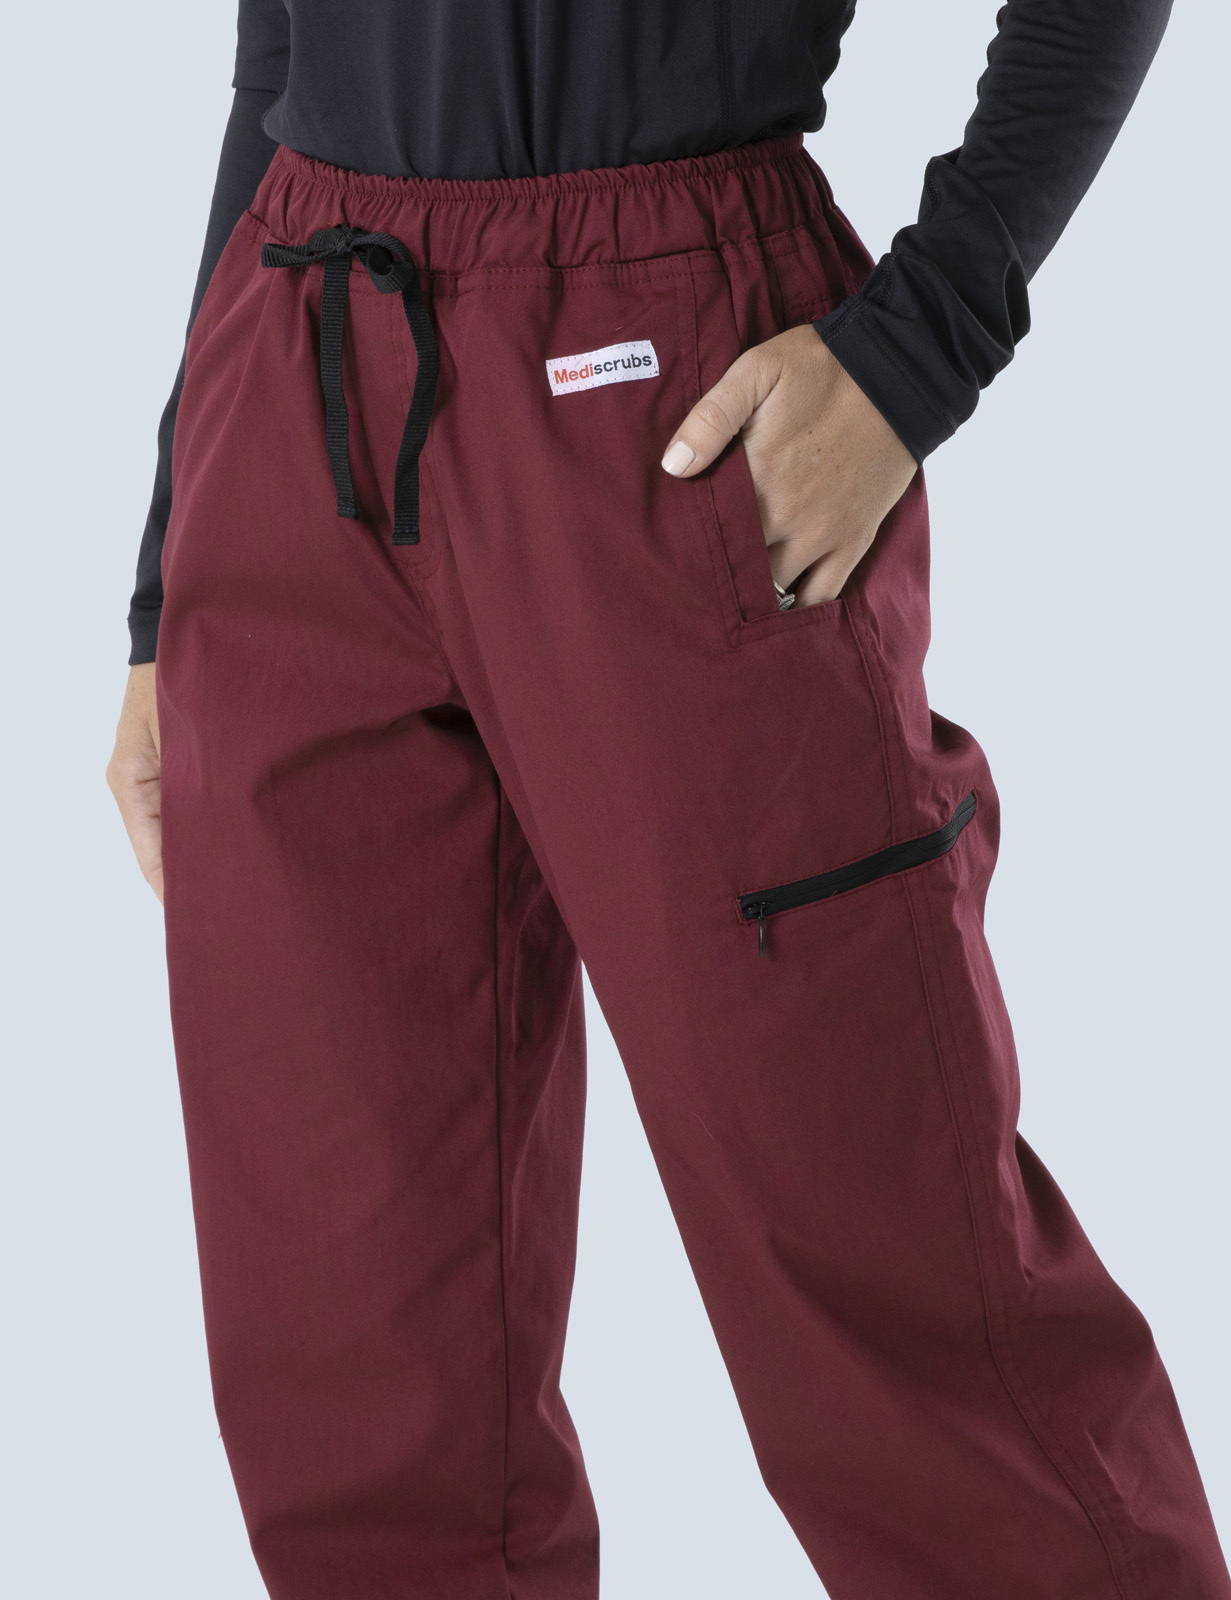 Women's Utility Pants - Burgundy - 3X Large - Tall - 2